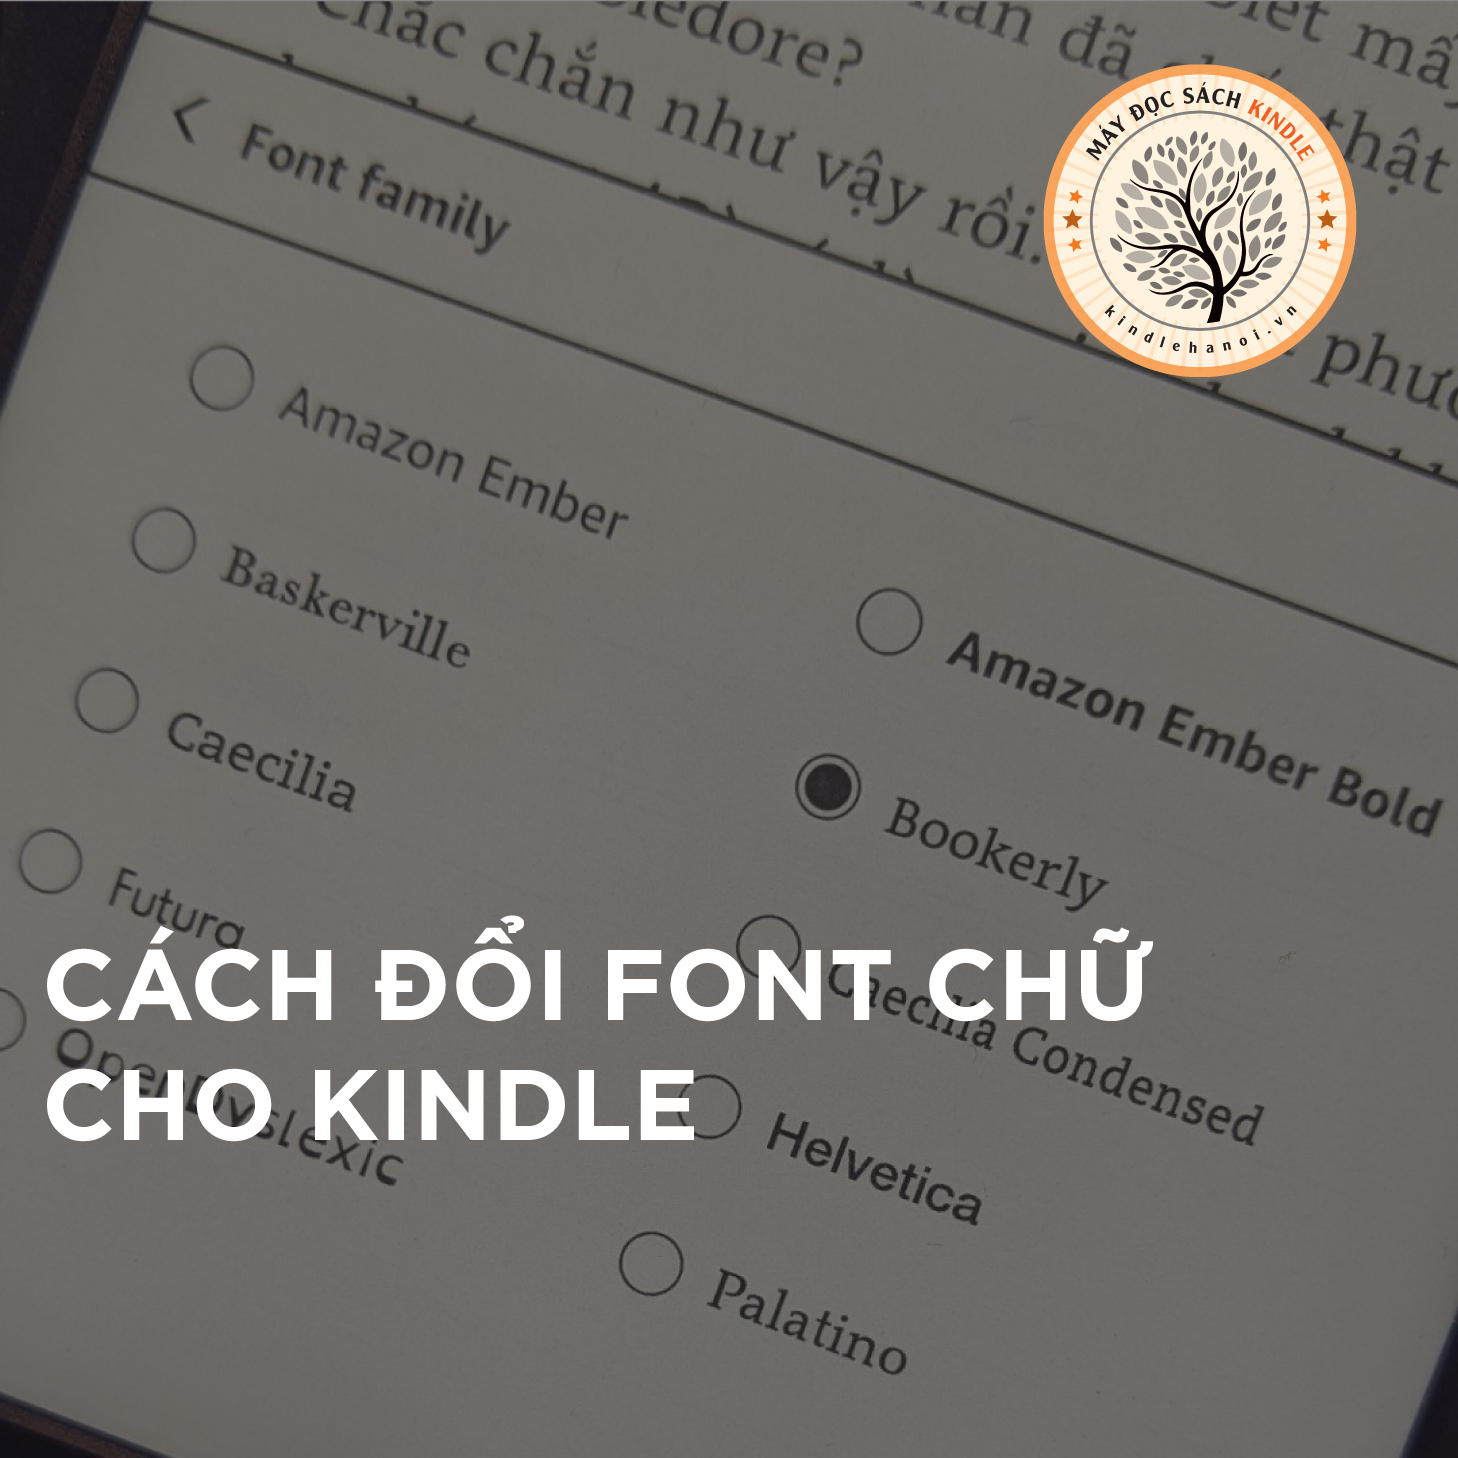 Cách đổi font chữ cho Kindle | Kindlehanoi.vn